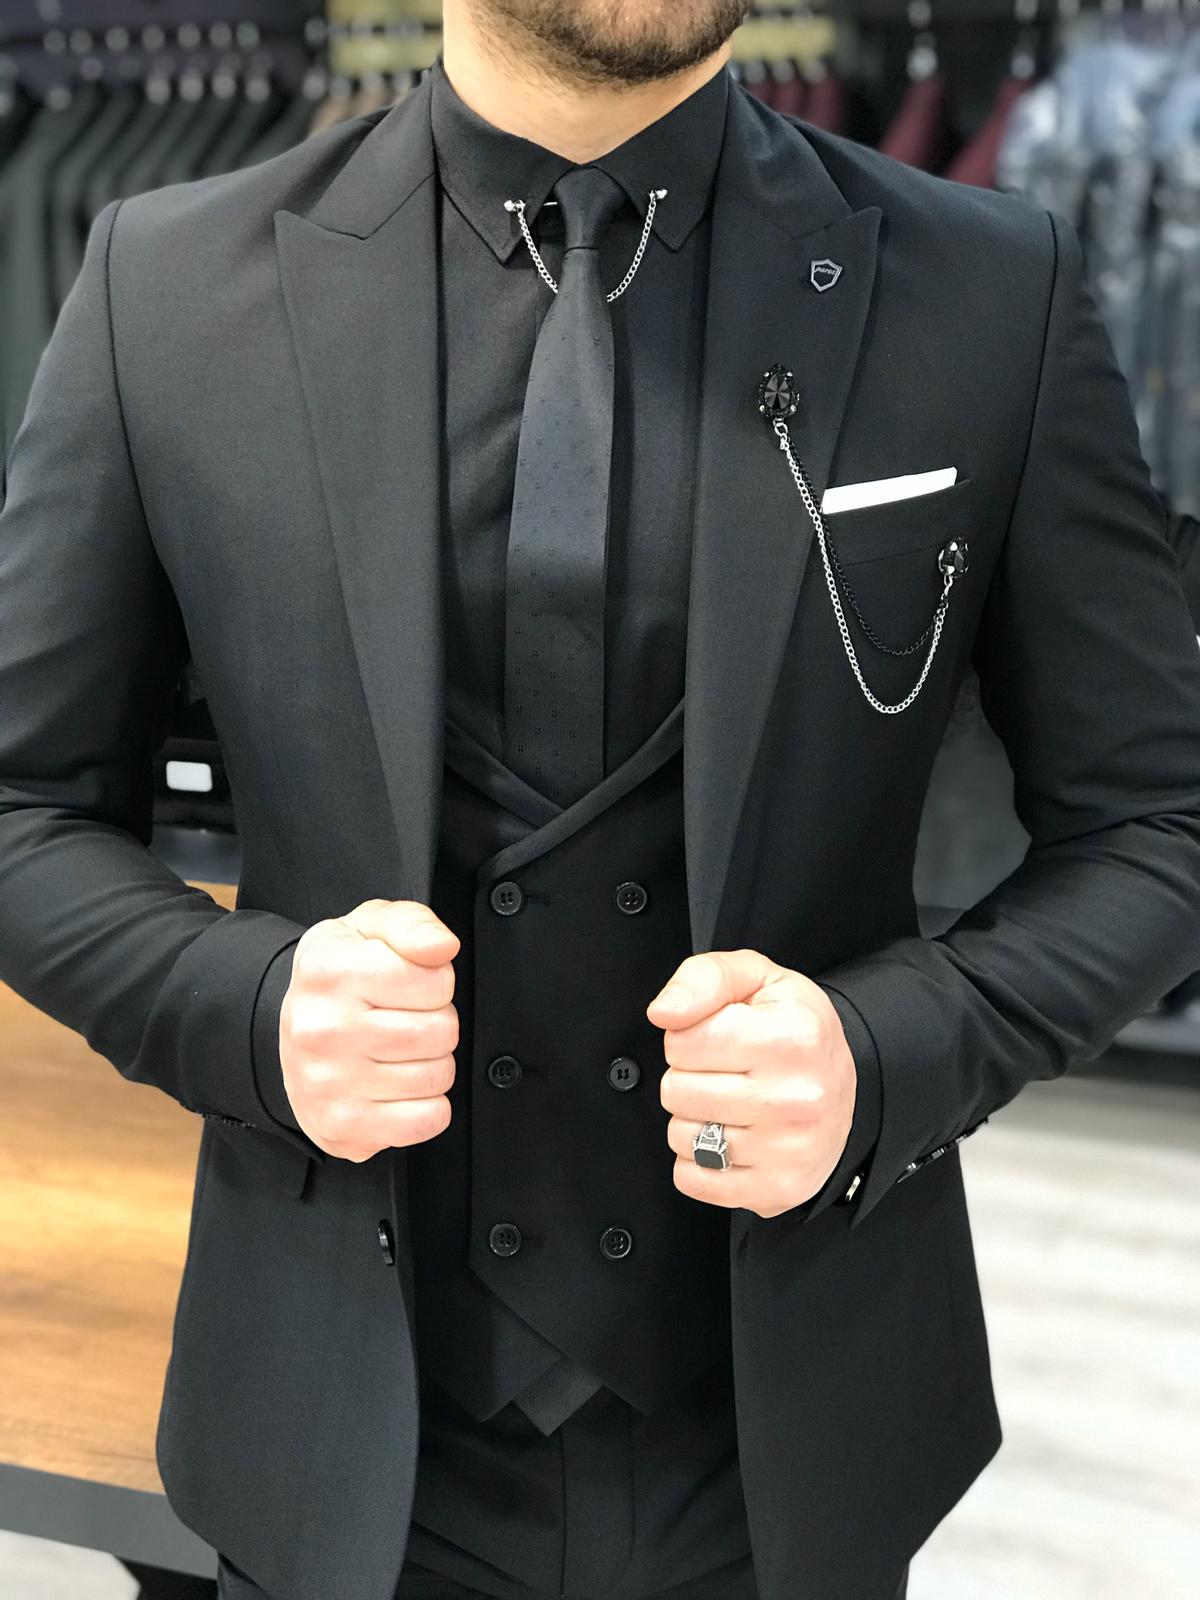 Formal Black Suit - Buy Formal Black Suit online in India